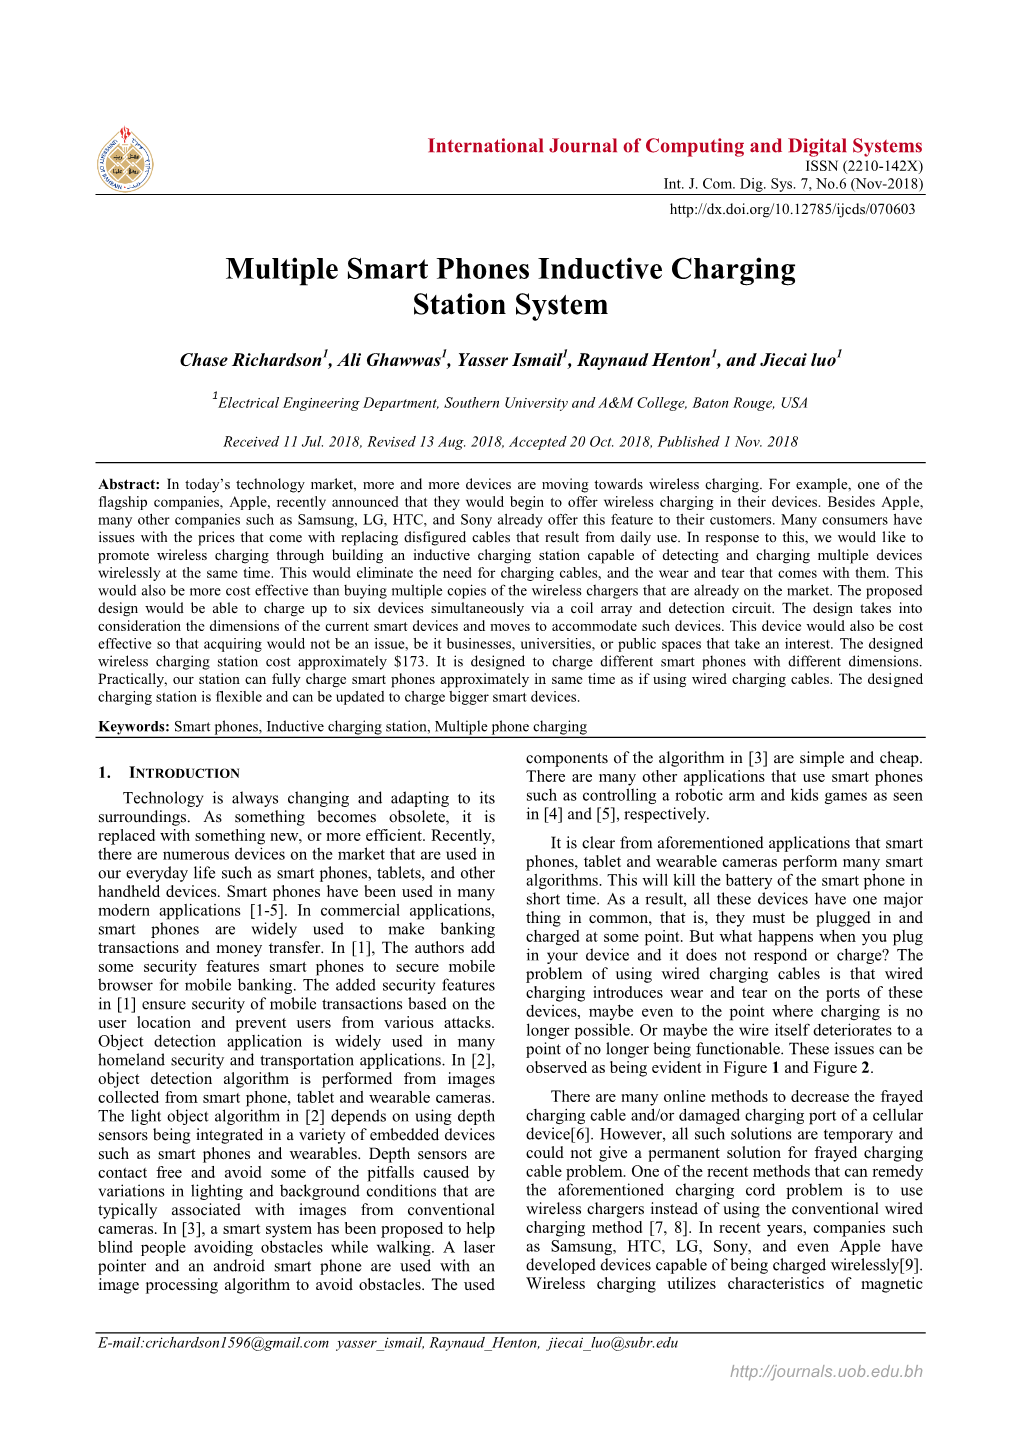 Multiple Smart Phones Inductive Charging Station System